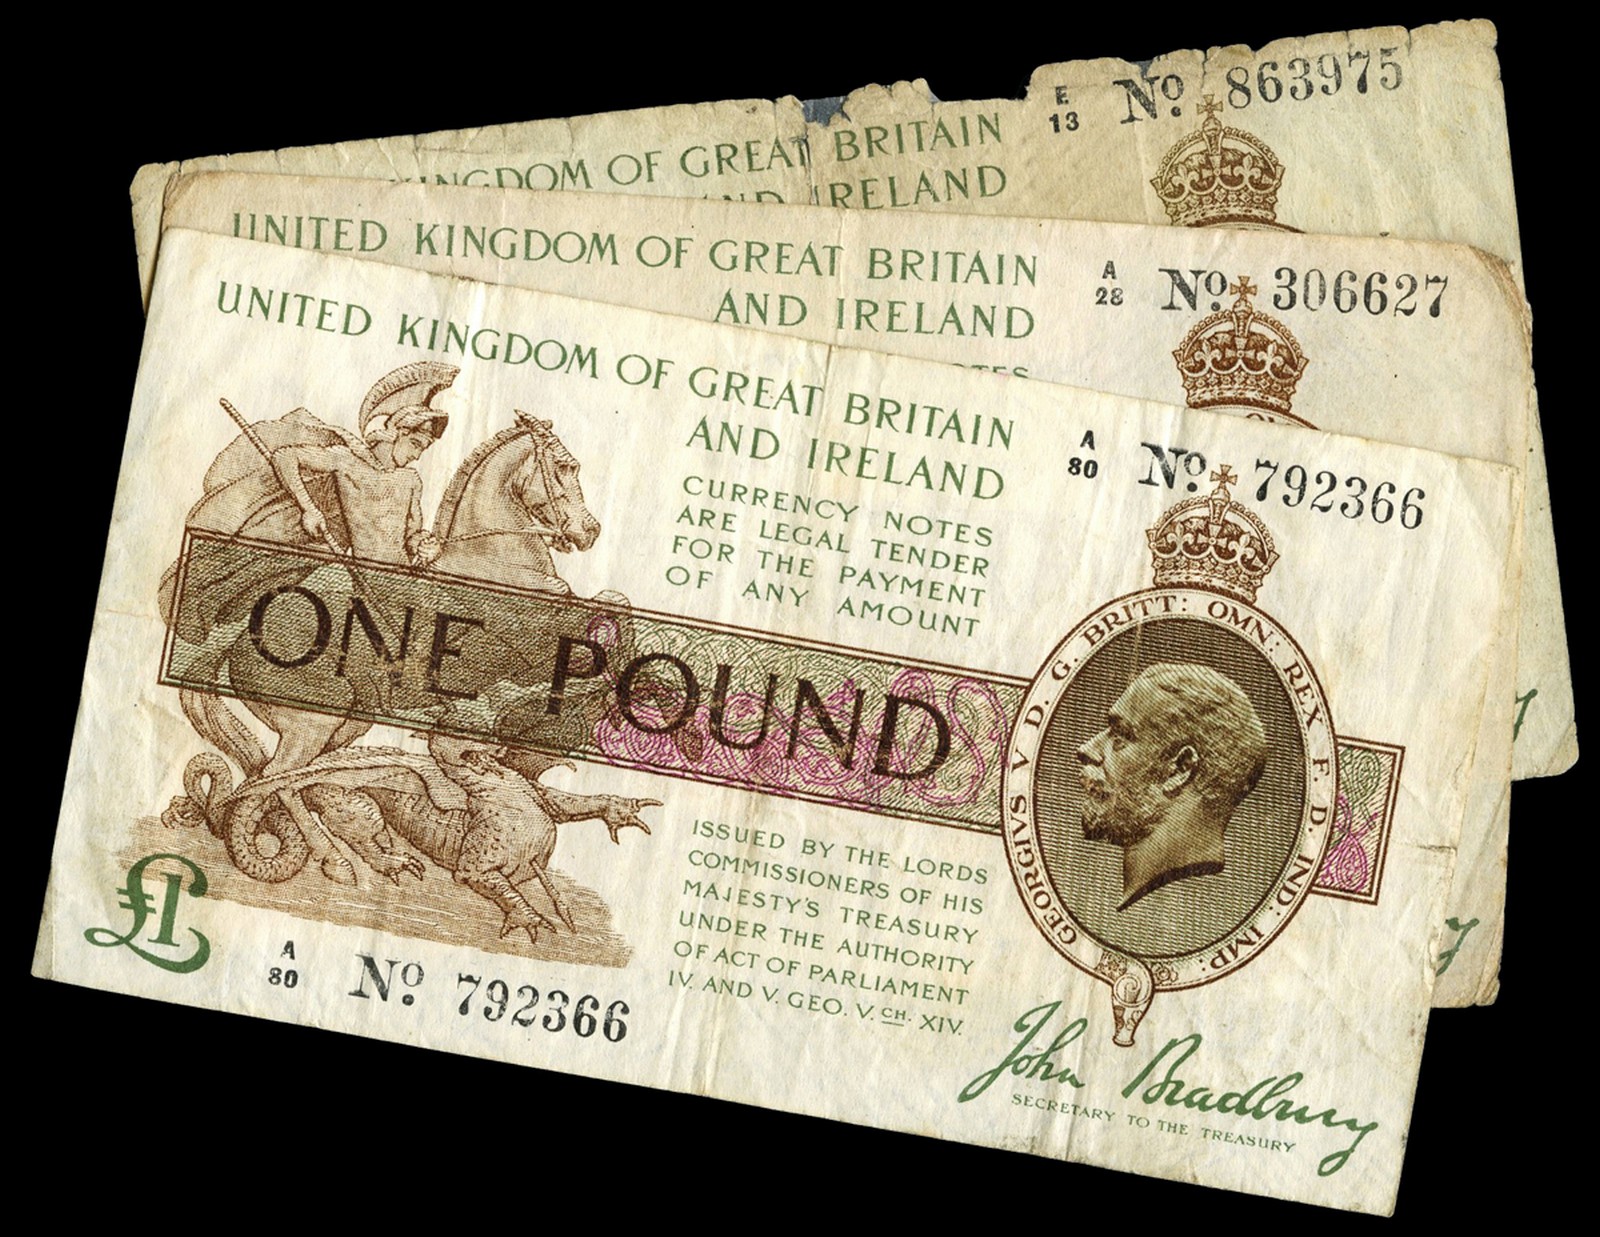 BRITISH BANKNOTES, Treasury, J. Bradbury, One Pound (3), all 1917-19, A/28 prefix, A/80 792366, E/13